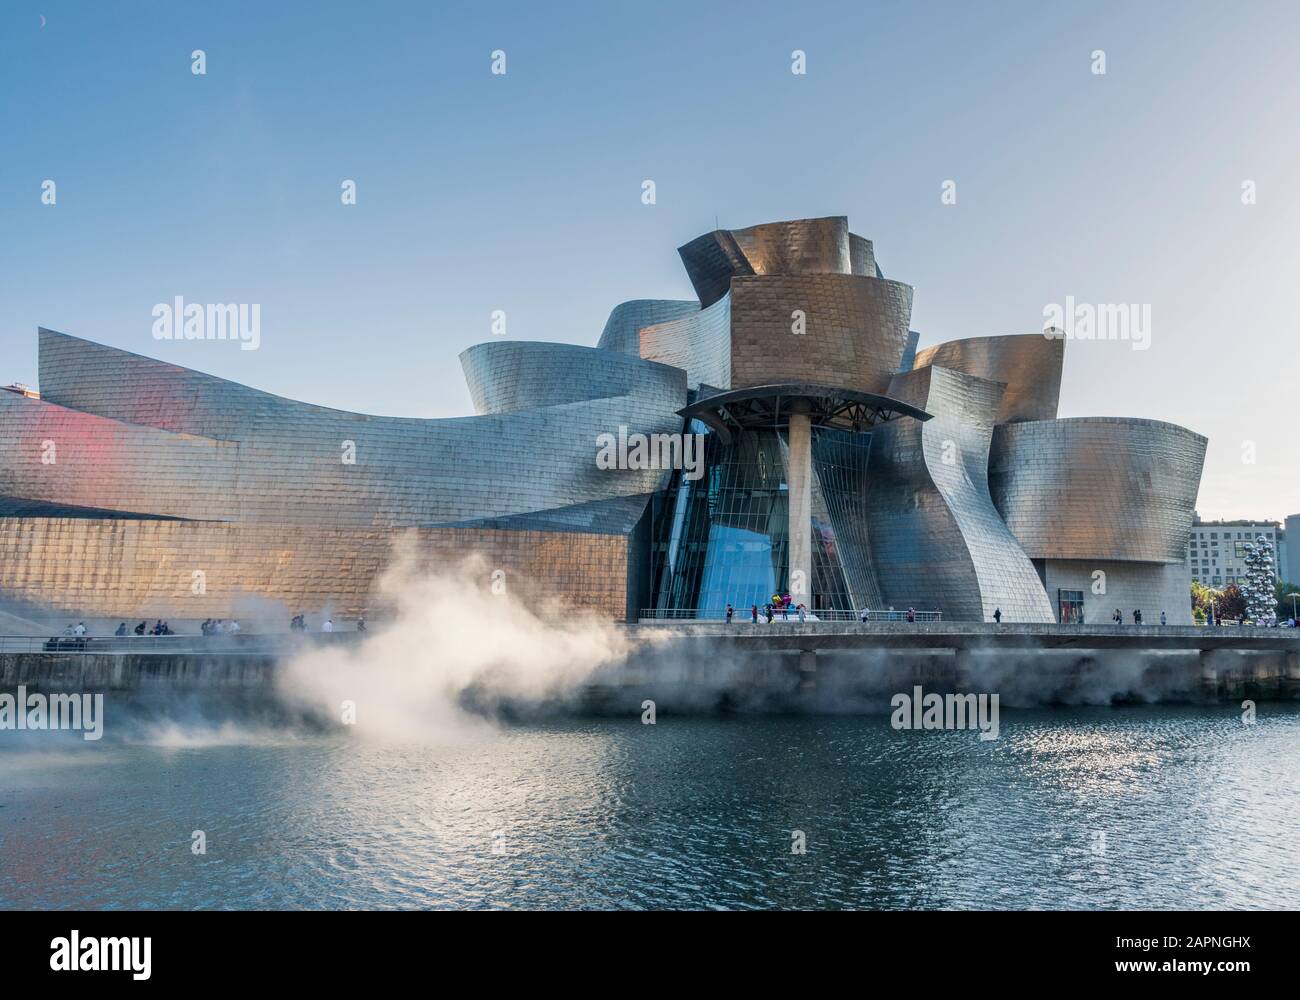 The iconic curvy metallic exterior of the Guggenheim Museum in Bilbao, Spain Stock Photo